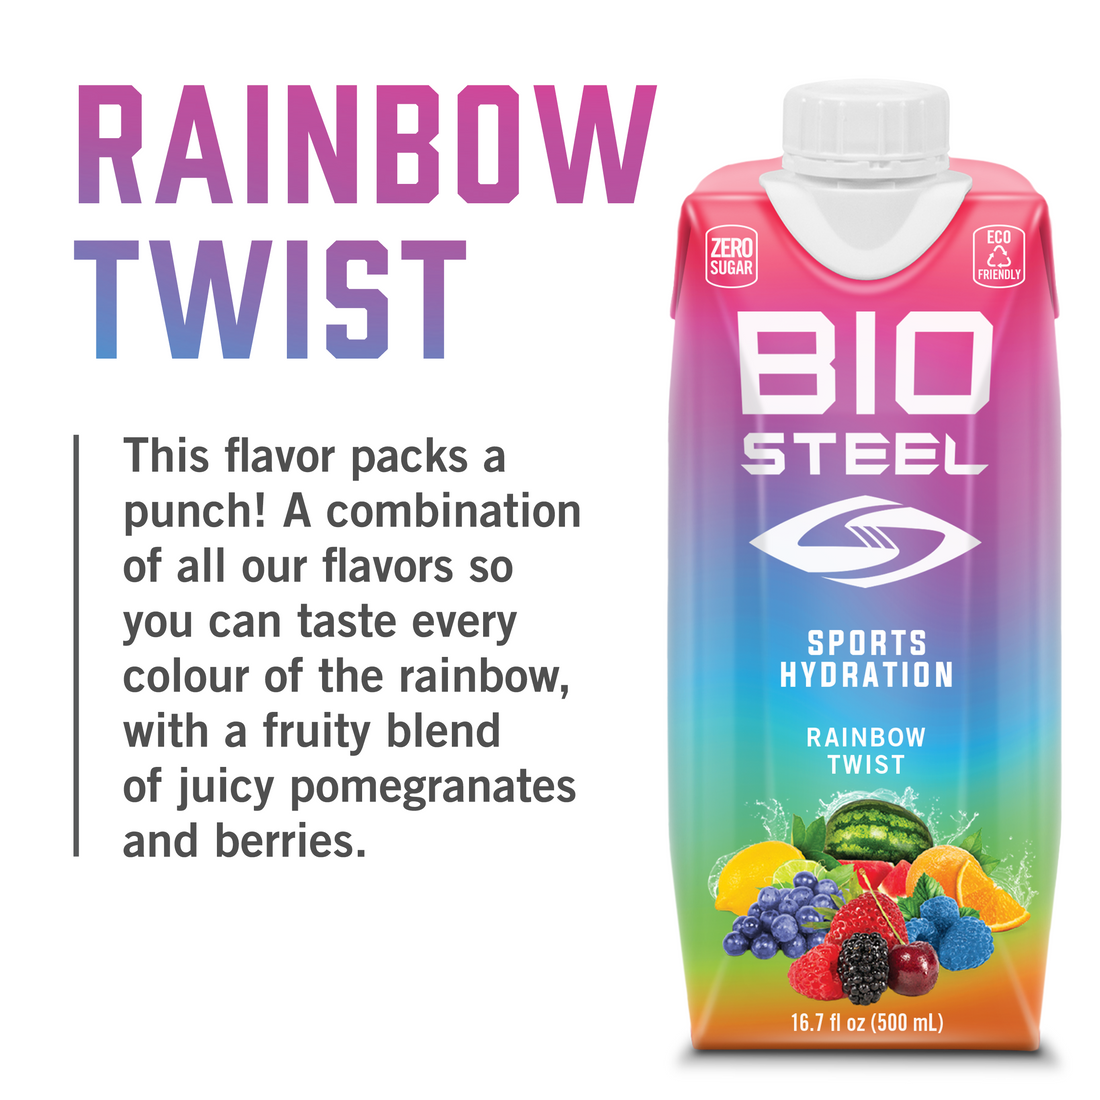 SPORTS DRINK / Rainbow Twist - 12 Pack